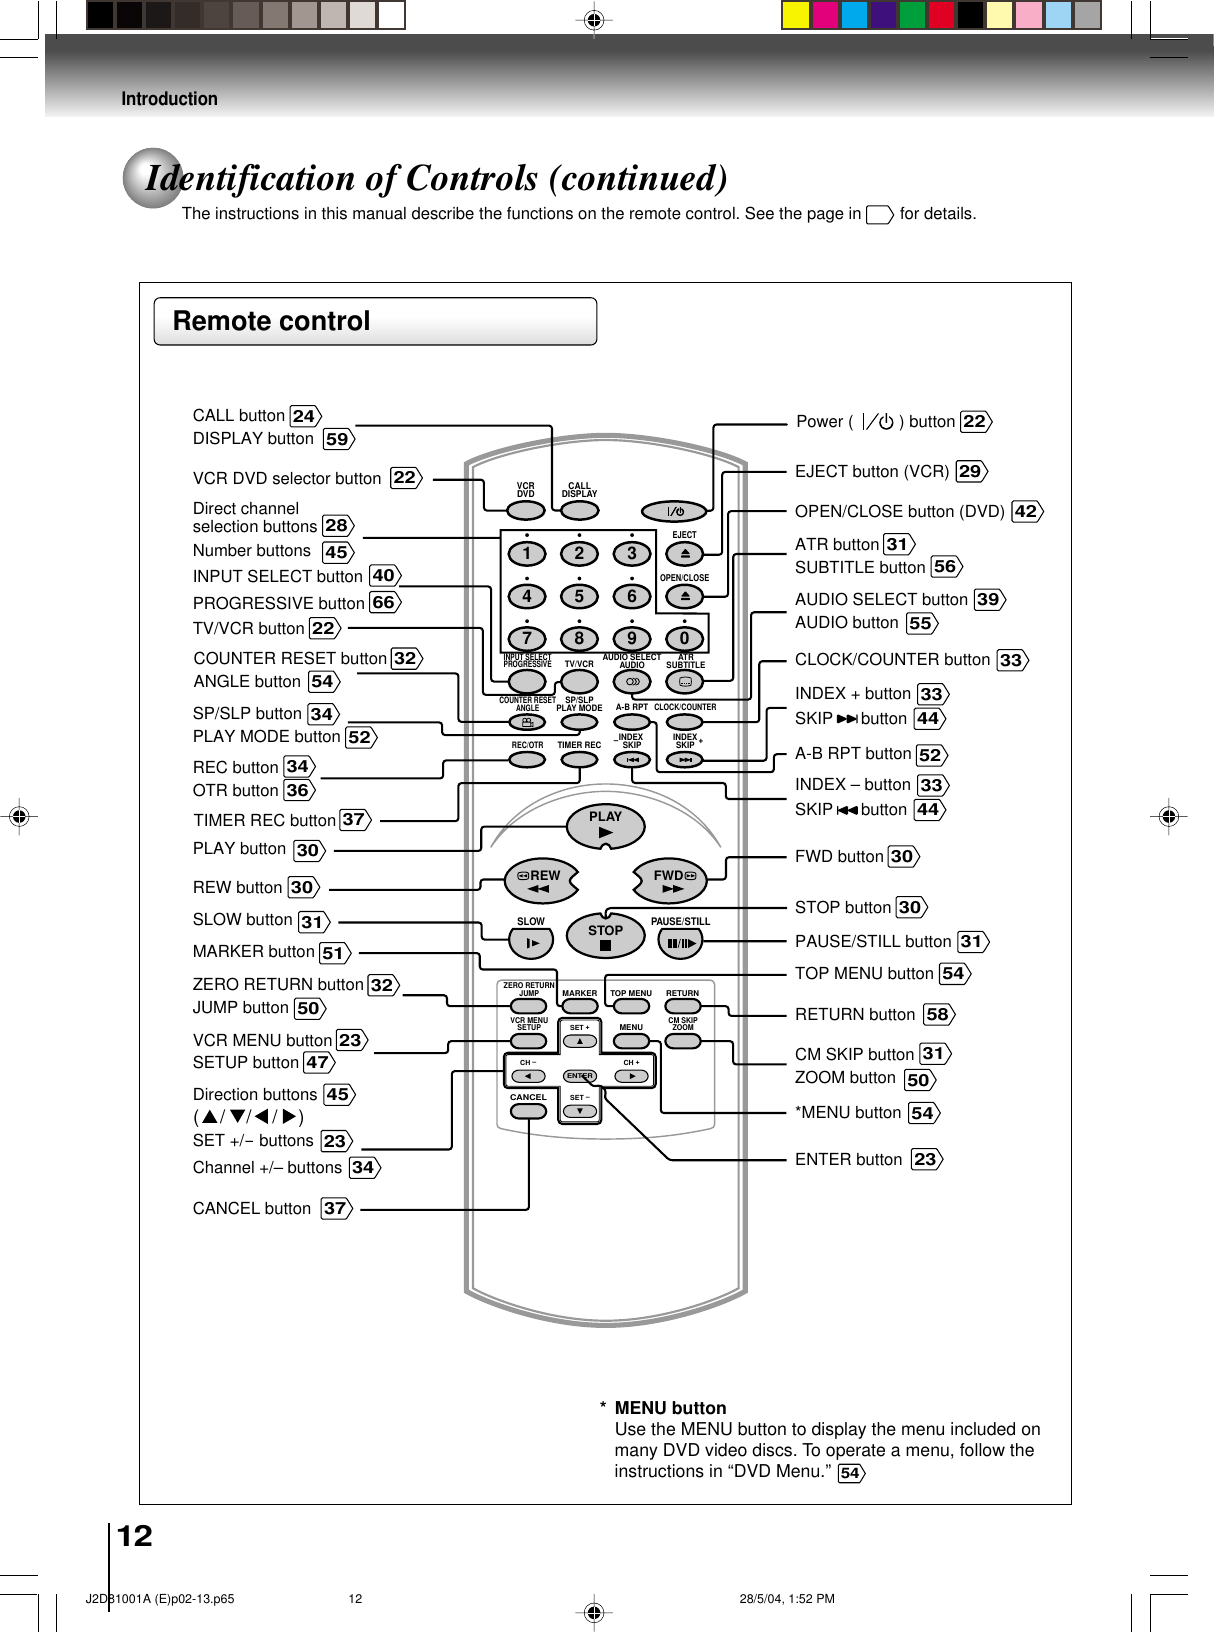 12IntroductionRemote control* MENU buttonUse the MENU button to display the menu included onmany DVD video discs. To operate a menu, follow theinstructions in “DVD Menu.” 54Identification of Controls (continued)The instructions in this manual describe the functions on the remote control. See the page in   for details.FWDREWSTOPPAUSE/STILLVCRDVD CALLDISPLAYTV/VCR AUDIO SELECTAUDIO ATRSUBTITLEA-B RPTCLOCK/COUNTERSP/SLPPLAY MODECOUNTER RESETANGLEINPUT SELECTPROGRESSIVEINDEX SKIP INDEXSKIPTIMER RECREC/OTROPEN/CLOSEEJECTMARKERSET +SET –CH –CH +TOP MENU RETURNZERO RETURNJUMPMENUVCR MENUSETUP CM SKIPZOOMCANCELENTERPLAY8796543210SLOW+–OPEN/CLOSE button (DVD)42ENTER button23RETURN button58CANCEL button37CLOCK/COUNTER button33CM SKIP buttonZOOM button315450MARKER buttonINPUT SELECT button40PROGRESSIVE button66PAUSE/STILL buttonSLOW buttonVCR DVD selector button2231SP/SLP buttonPLAY MODE button3452AUDIO SELECT buttonAUDIO button395155FWD button3031INDEX + buttonSKIP      button4433A-B RPT button52PLAY button30Channel +/– buttons342459CALL buttonDISPLAY buttonINDEX – buttonSKIP      button4433TIMER REC buttonSET +/- buttons23EJECT button (VCR)29TOP MENU button54VCR MENU buttonSETUP button234756TV/VCR button22ATR buttonSUBTITLE button31COUNTER RESET buttonANGLE button543237REW button30ZERO RETURN buttonJUMP button3250STOP button30REC buttonOTR button3436*MENU button(    /    /    /    )Direction buttons45Direct channelselection buttonsNumber buttons452822) buttonPower (J2D81001A (E)p02-13.p65 28/5/04, 1:52 PM12